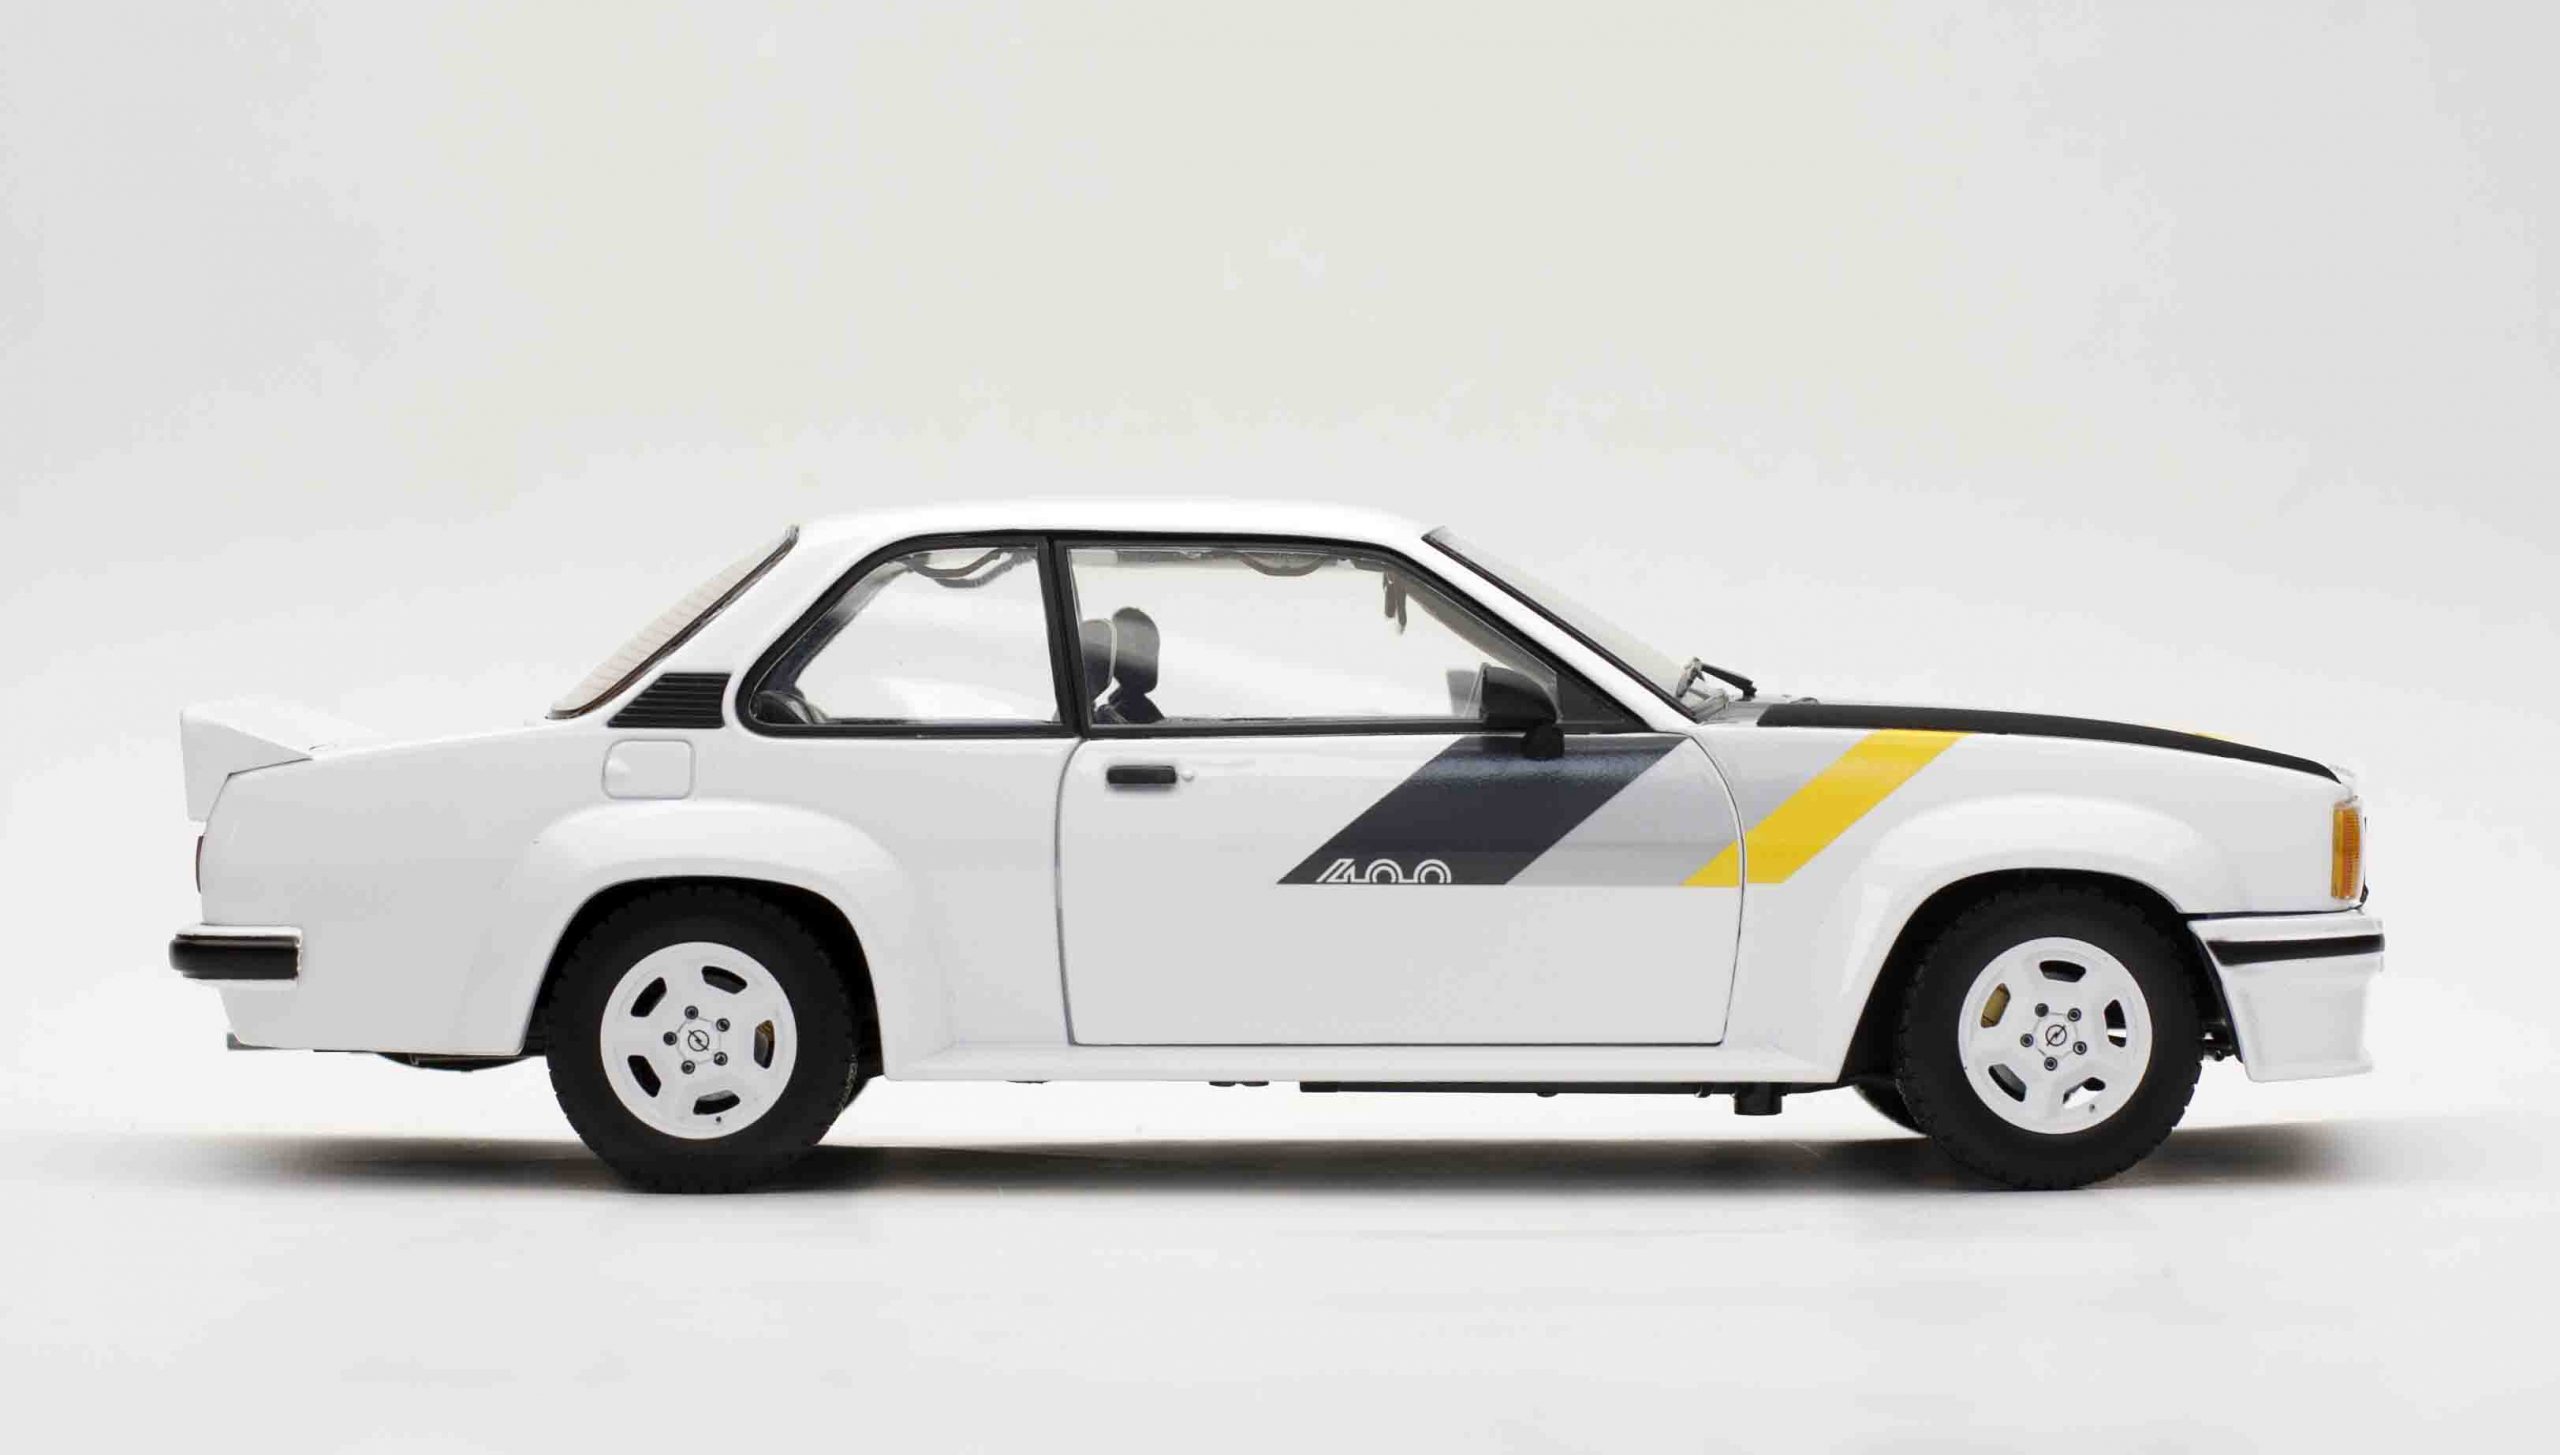 Opel Ascona 400 1982 white/yellow/grey/black SunStar Metallmodell 1:18